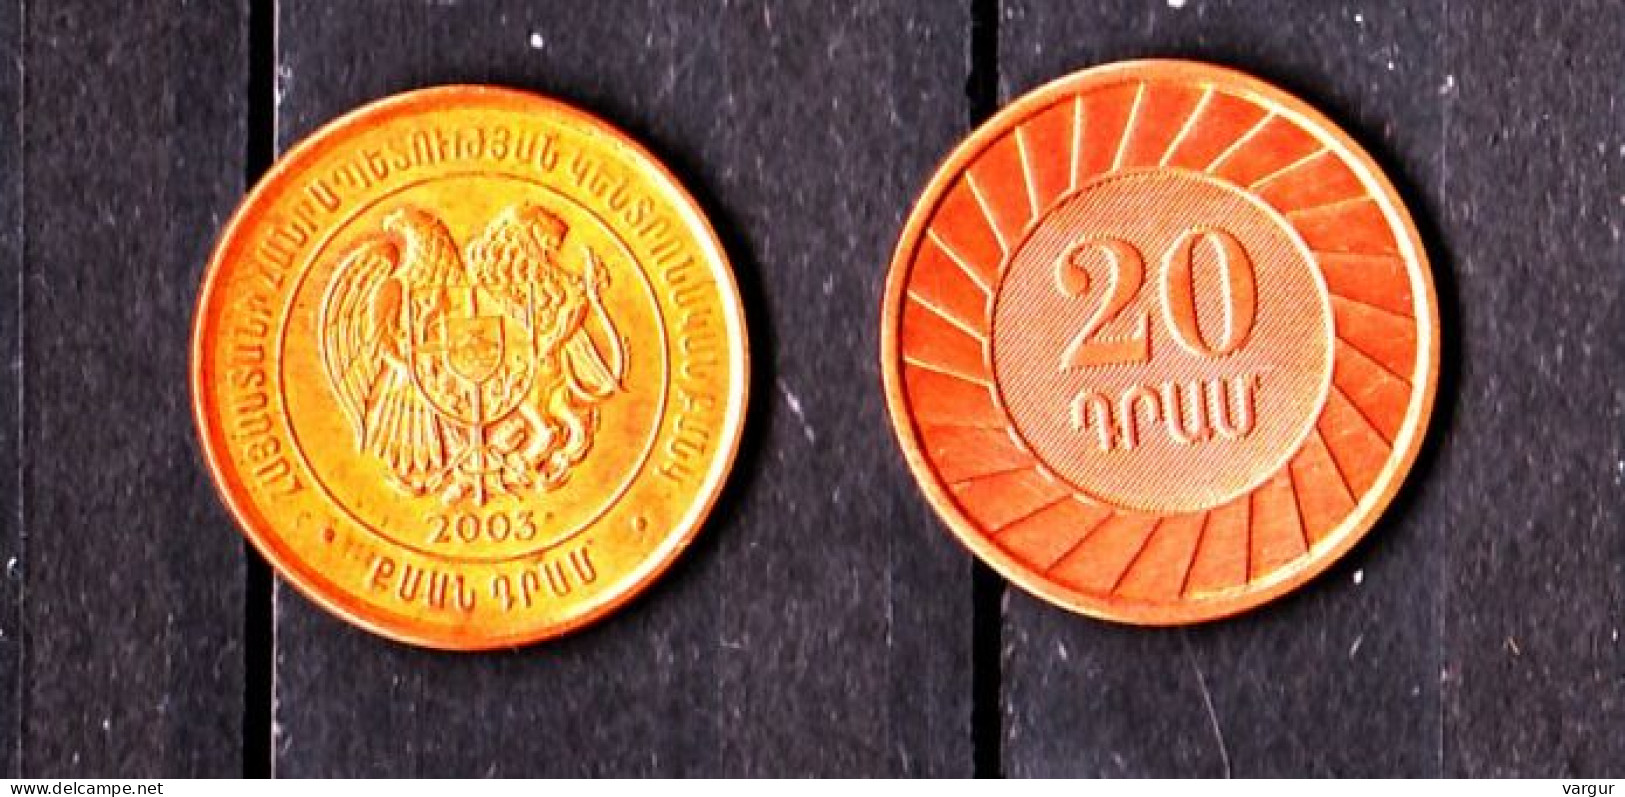 ARMENIA 2003. 20 Dram Coin, VF - Armenia